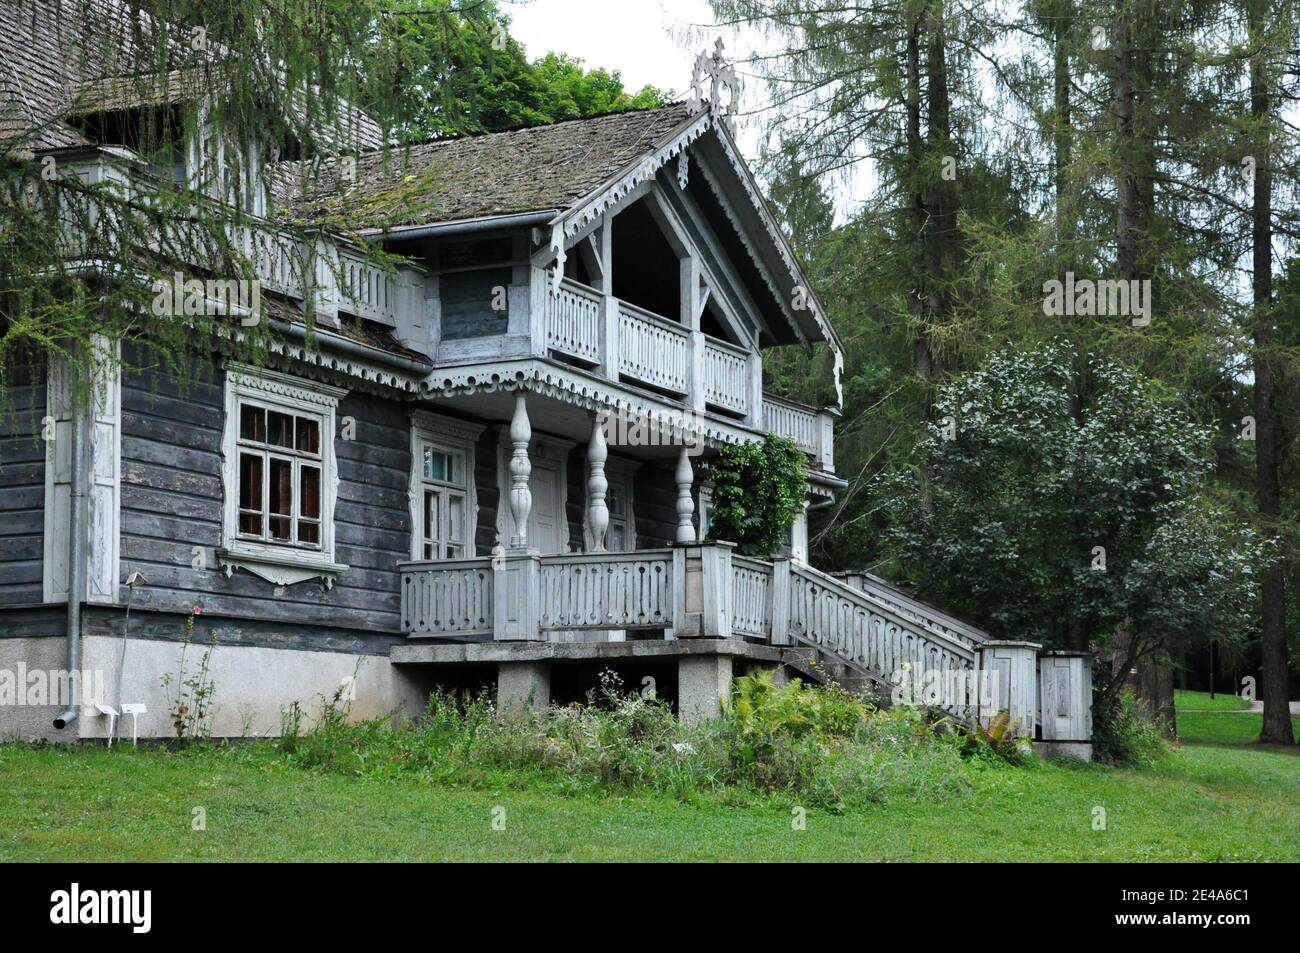 Storica casa padronale in legno a Białowieża in Polonia. Foto Stock